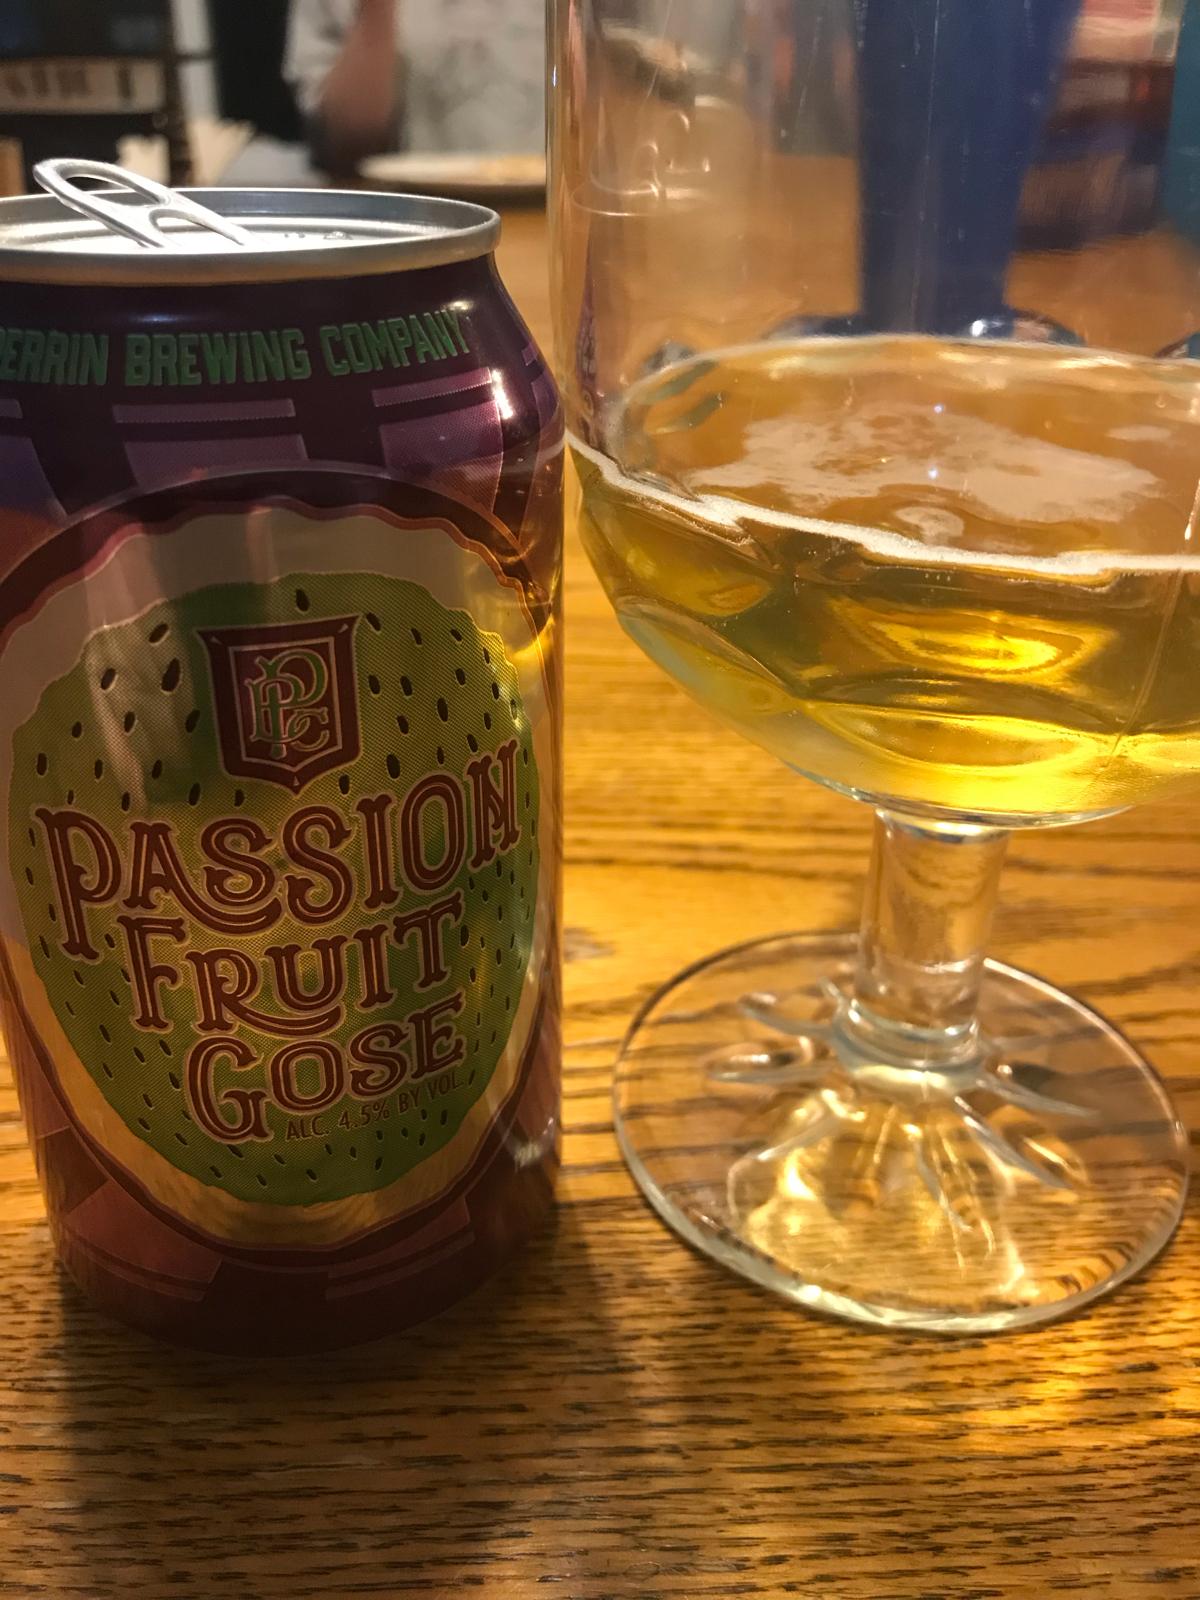 Passion Fruit Gose